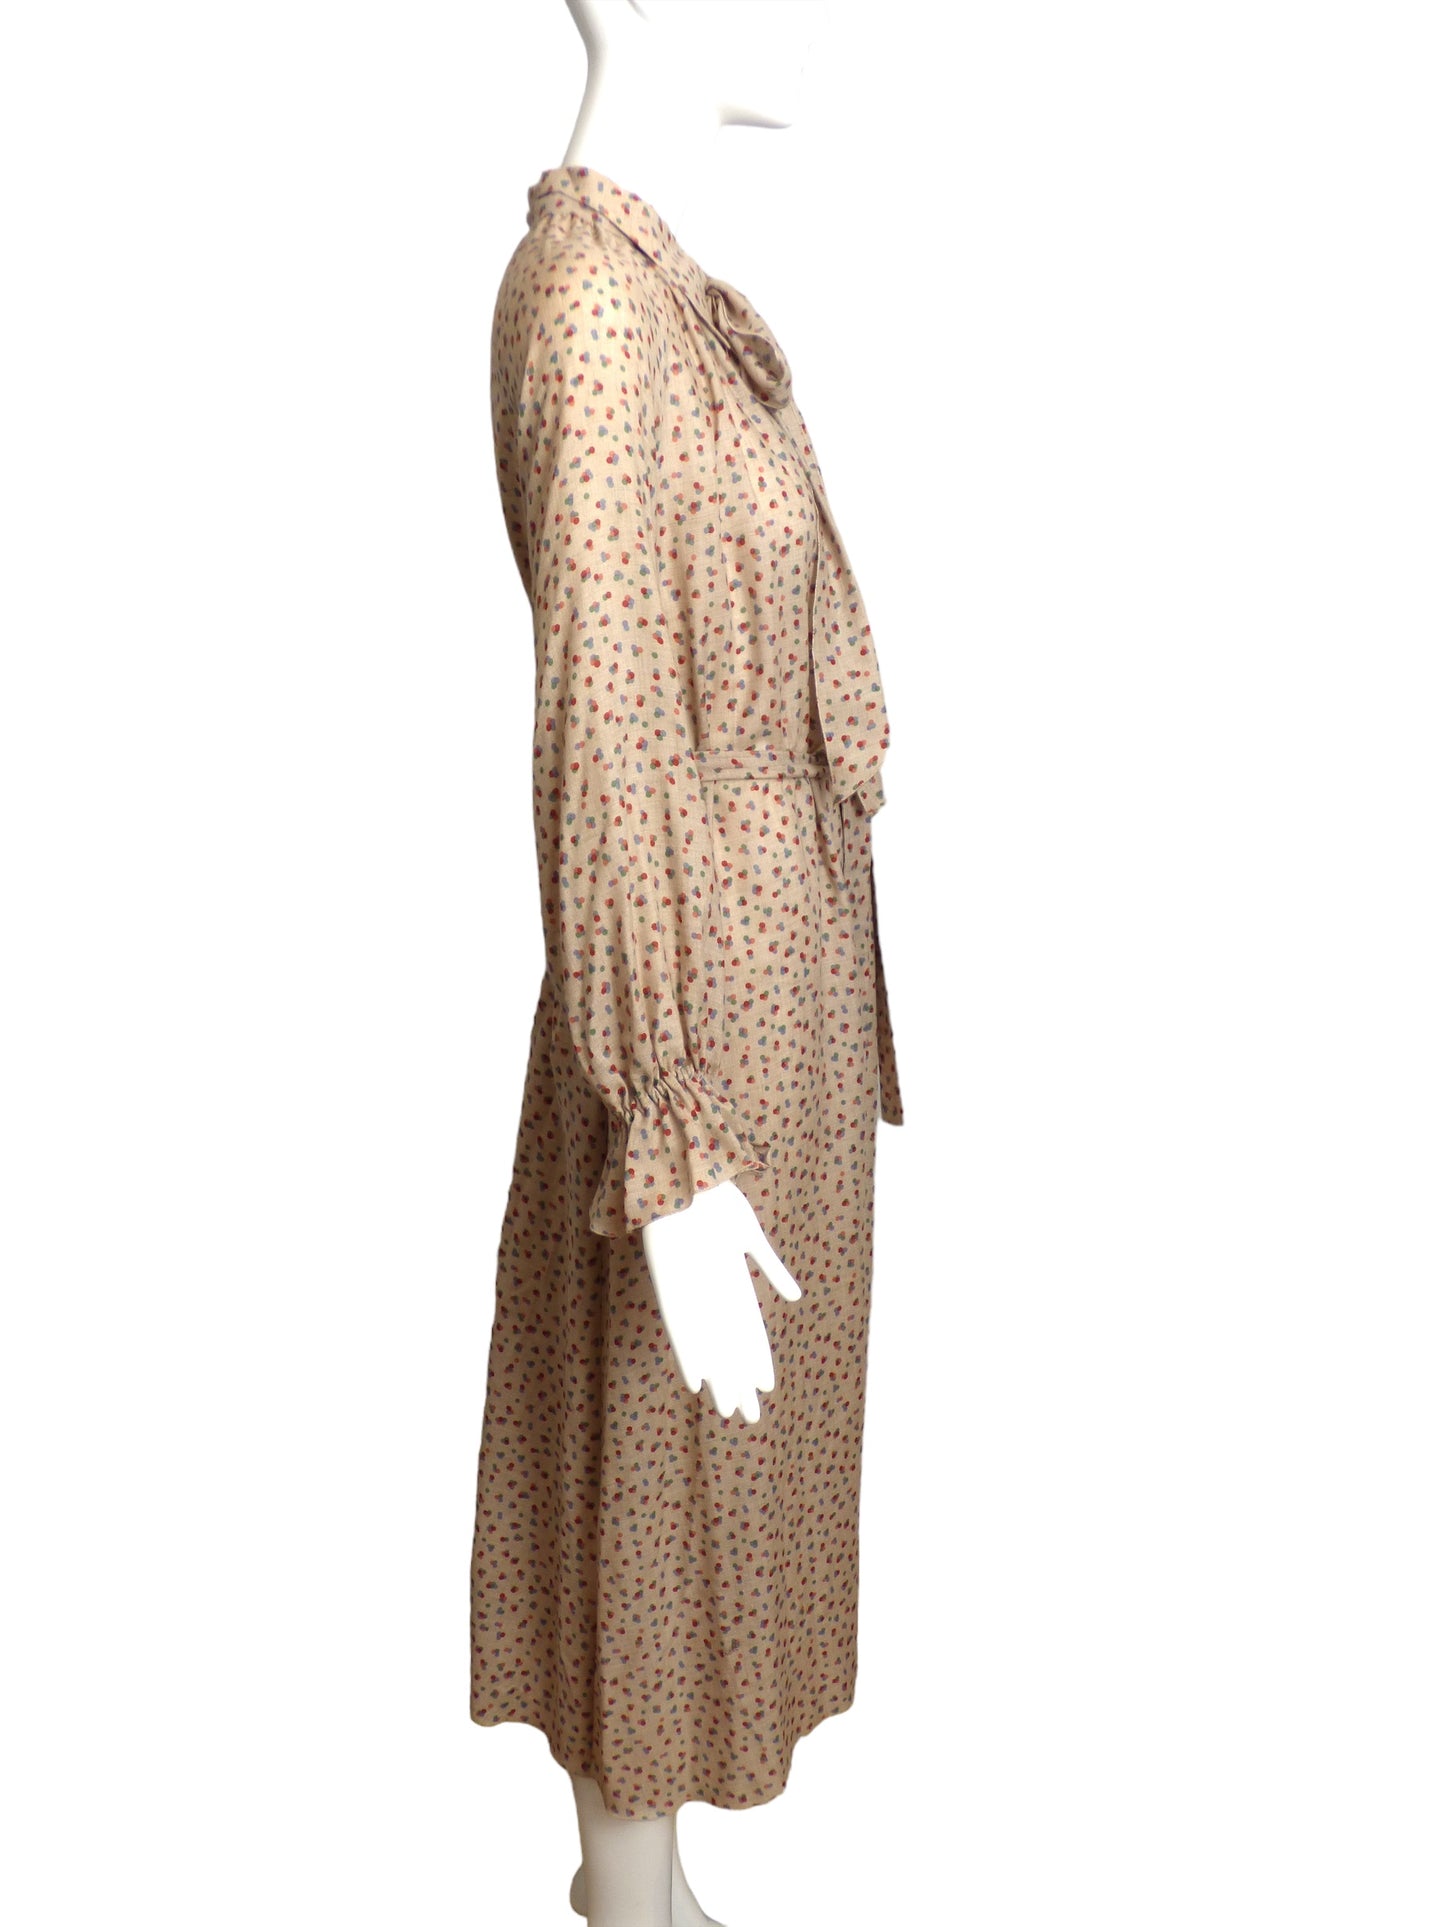 CHLOE- 1970s Cashmere Print Dress, Size 10